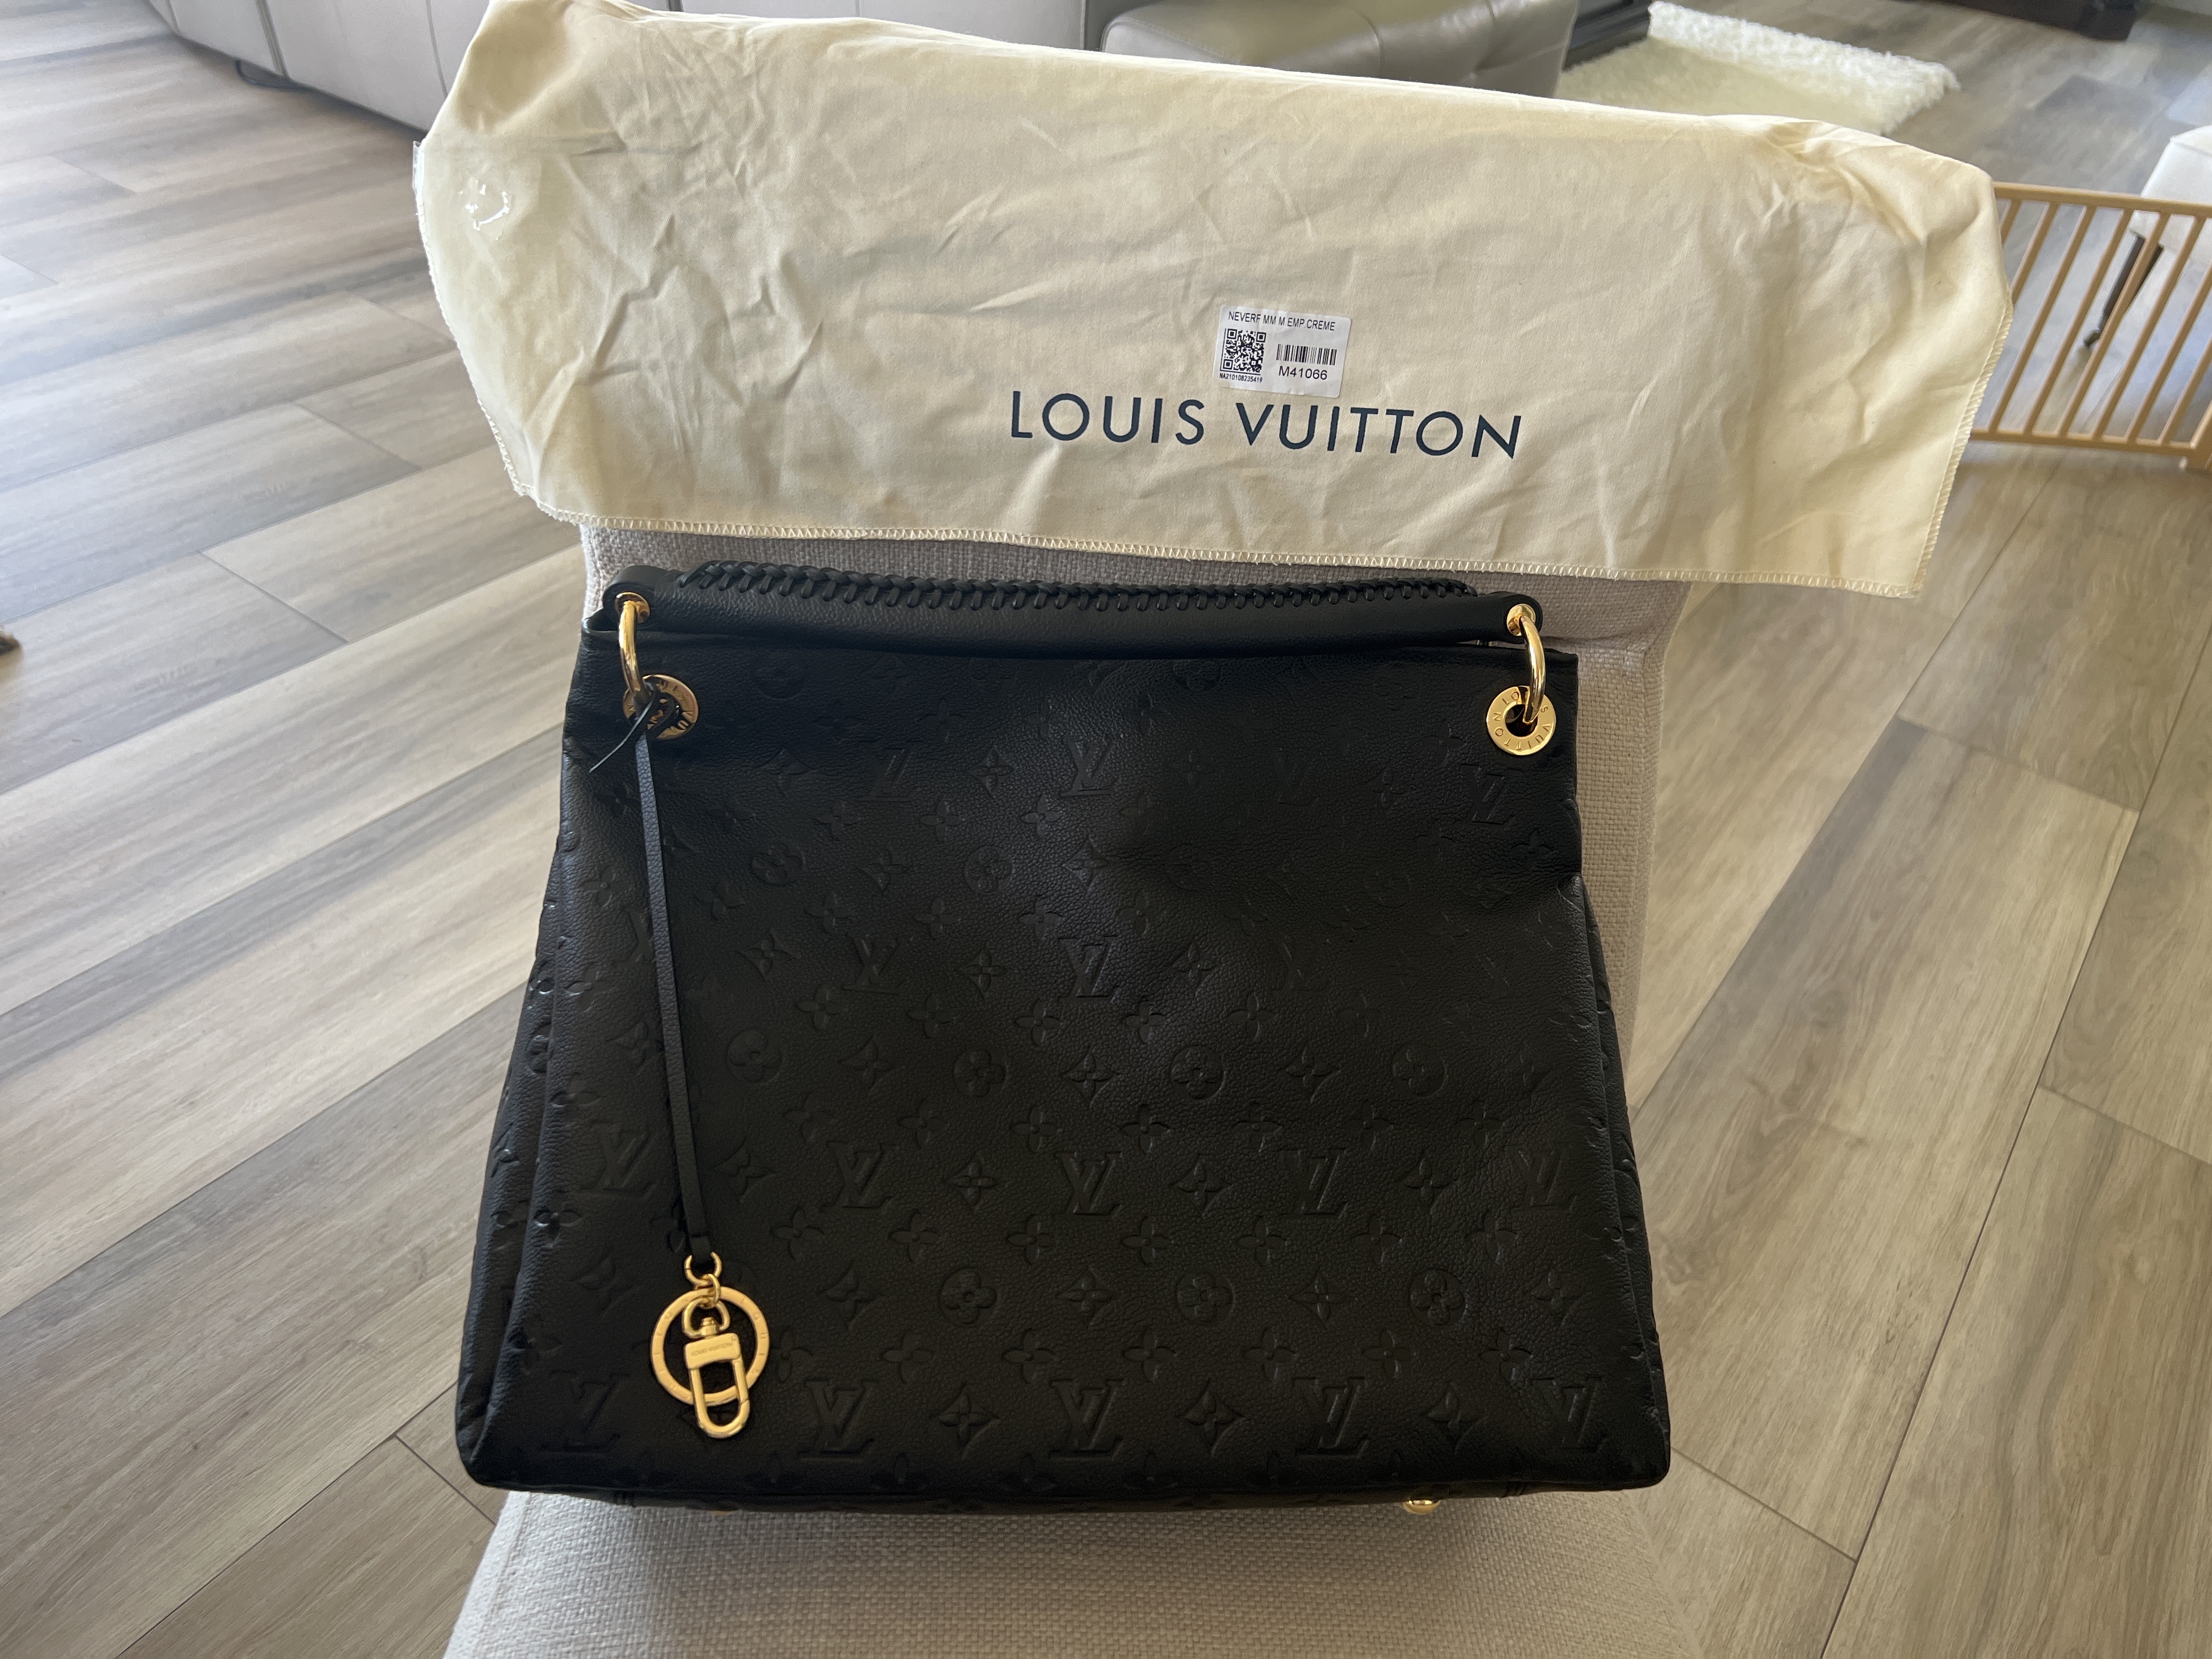 Louis Vuitton Bleeker Review - Collecting Louis Vuitton - Review 7